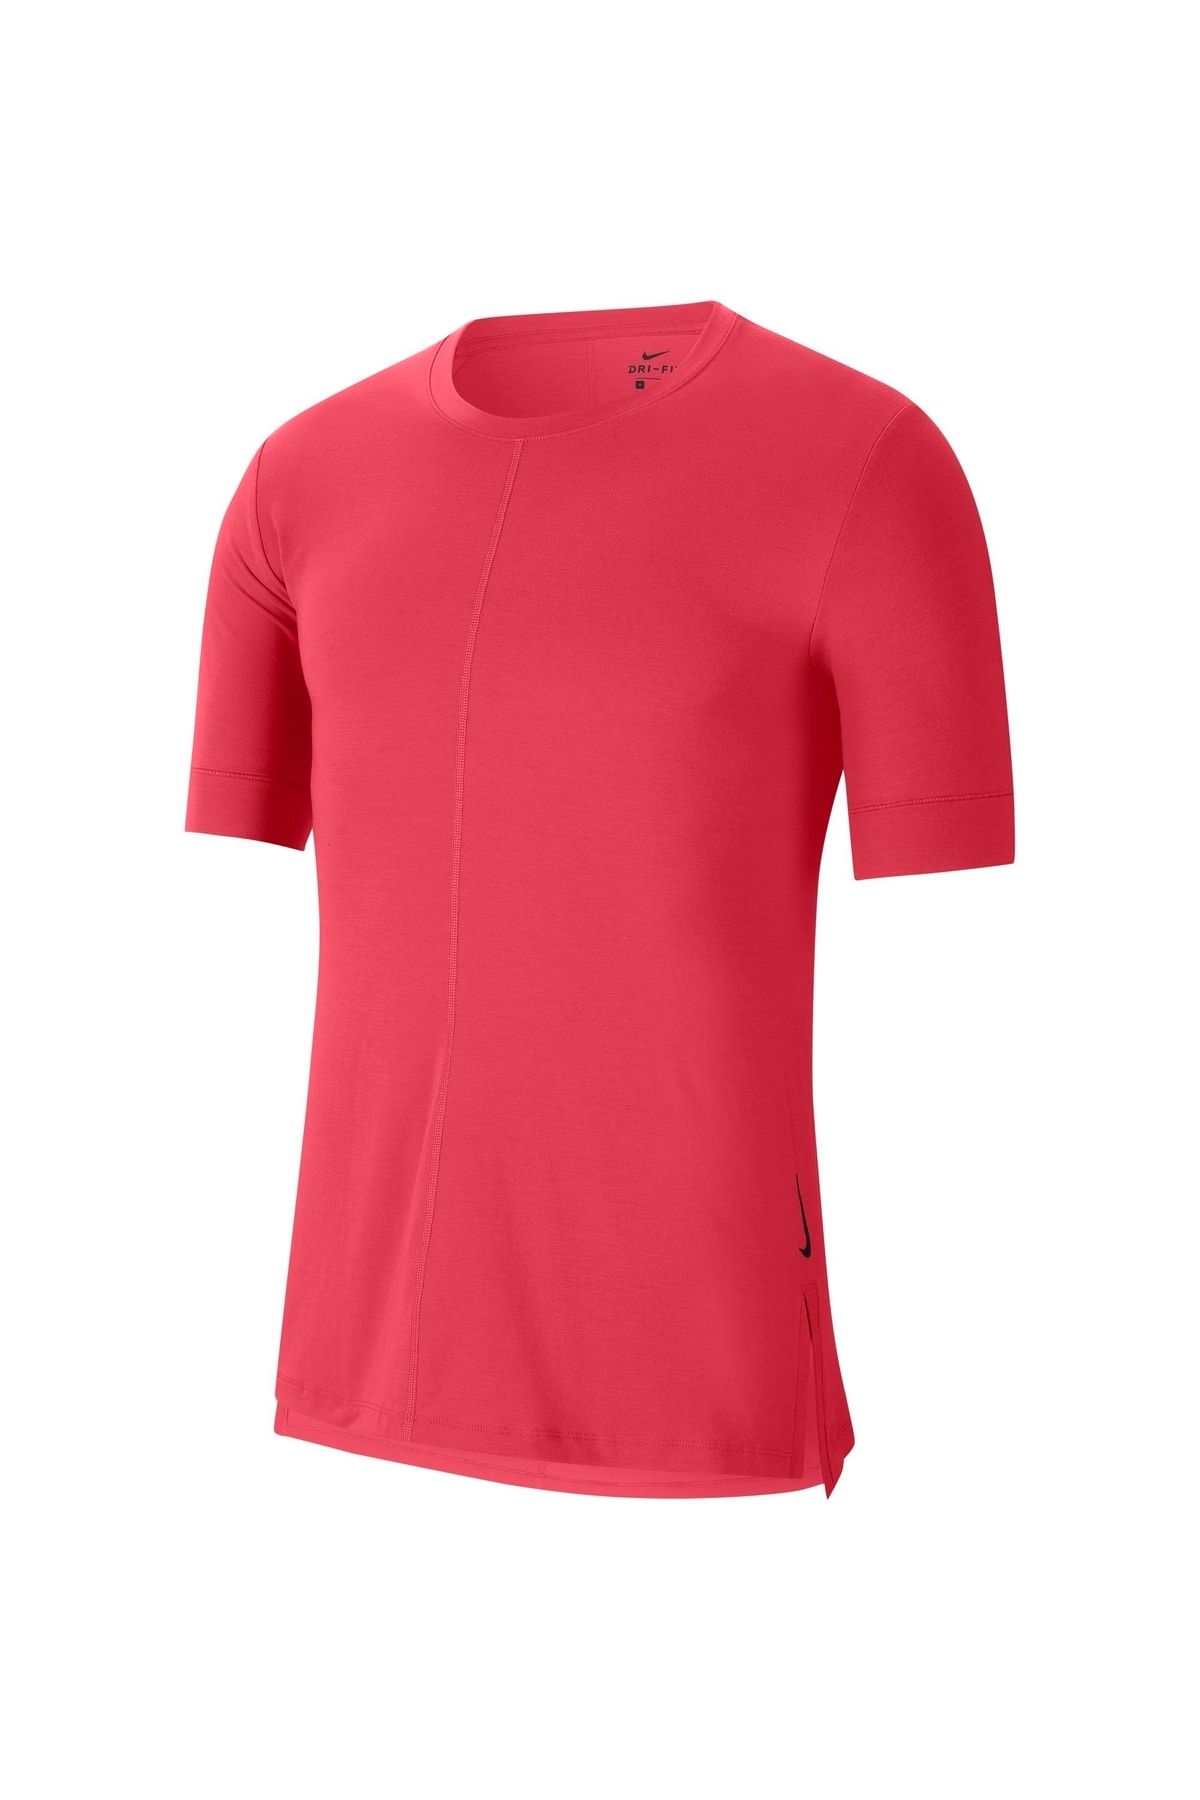 Футболка Nike Yoga Short-Sleeve Top White CJ9326-121 купить в